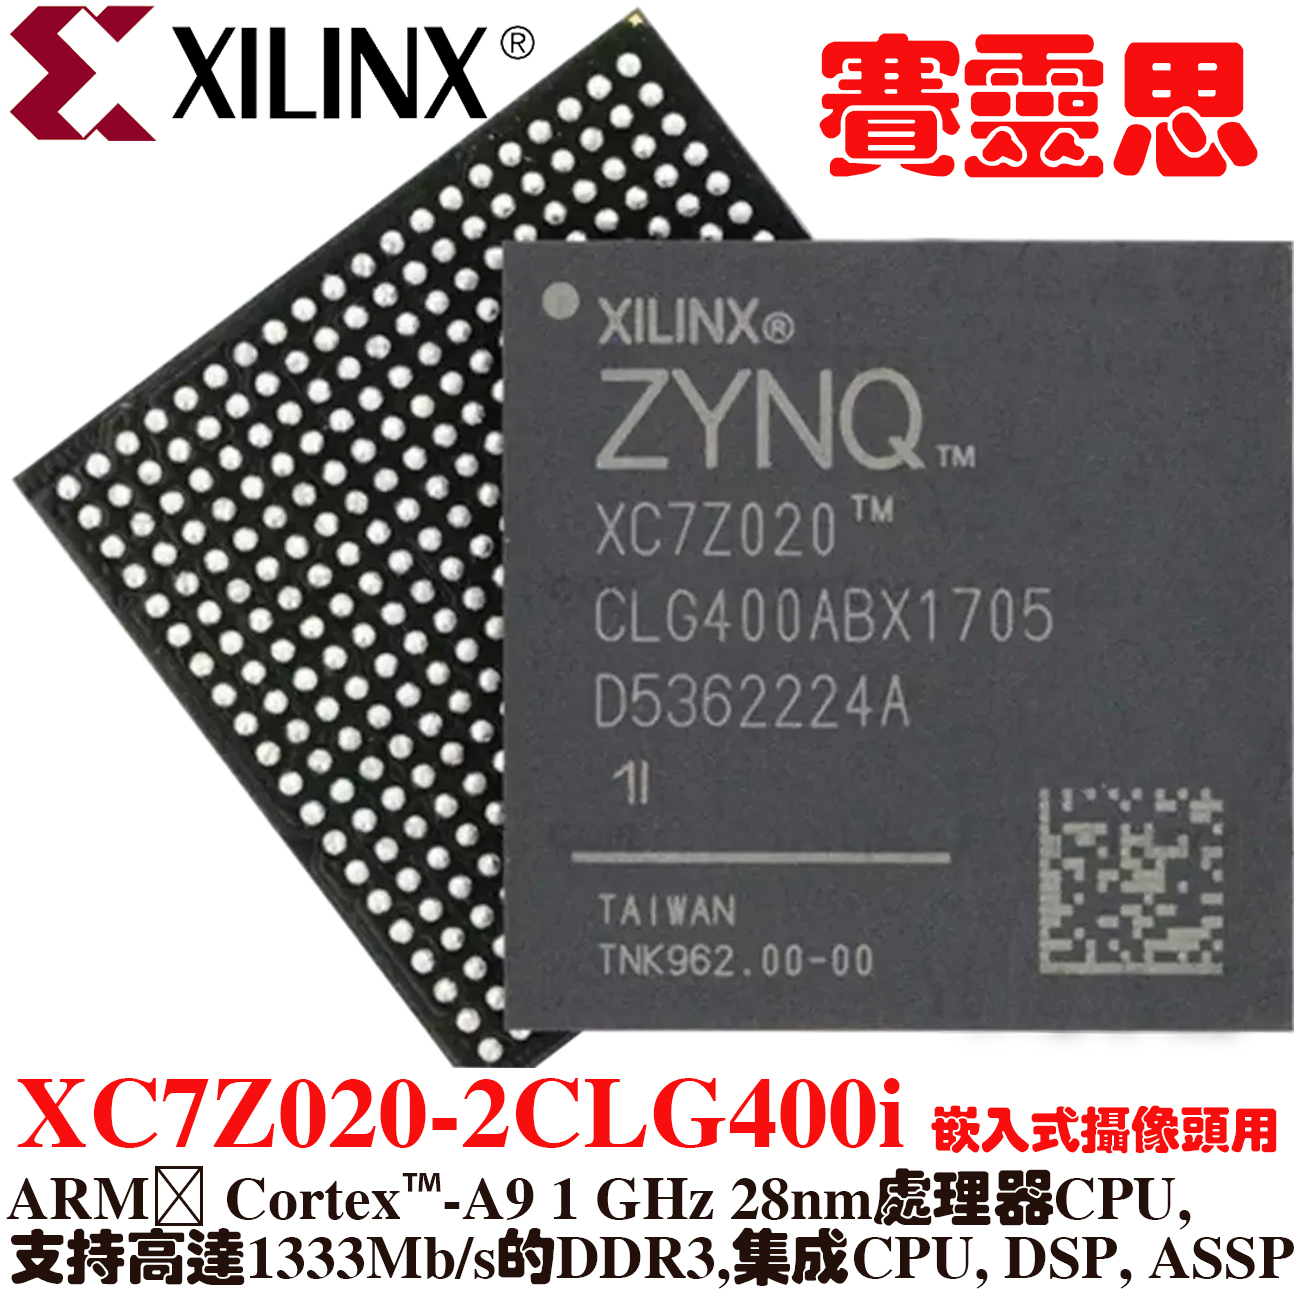 XC7Z020-2CLG400i，Zynq-7000 SoC，XiLinx单核ARM Cortex-A9， 1 GHz 28nm处理器CPU,支持1333Mb/s DDR3 的CPU,集成CPU, DSP, ASSP，嵌入式摄像头用的处理器，ARM AMBA AXI, I2C interfaces, SPI ports, USB 2.0 compliant ports, master/slave I2C interfaces